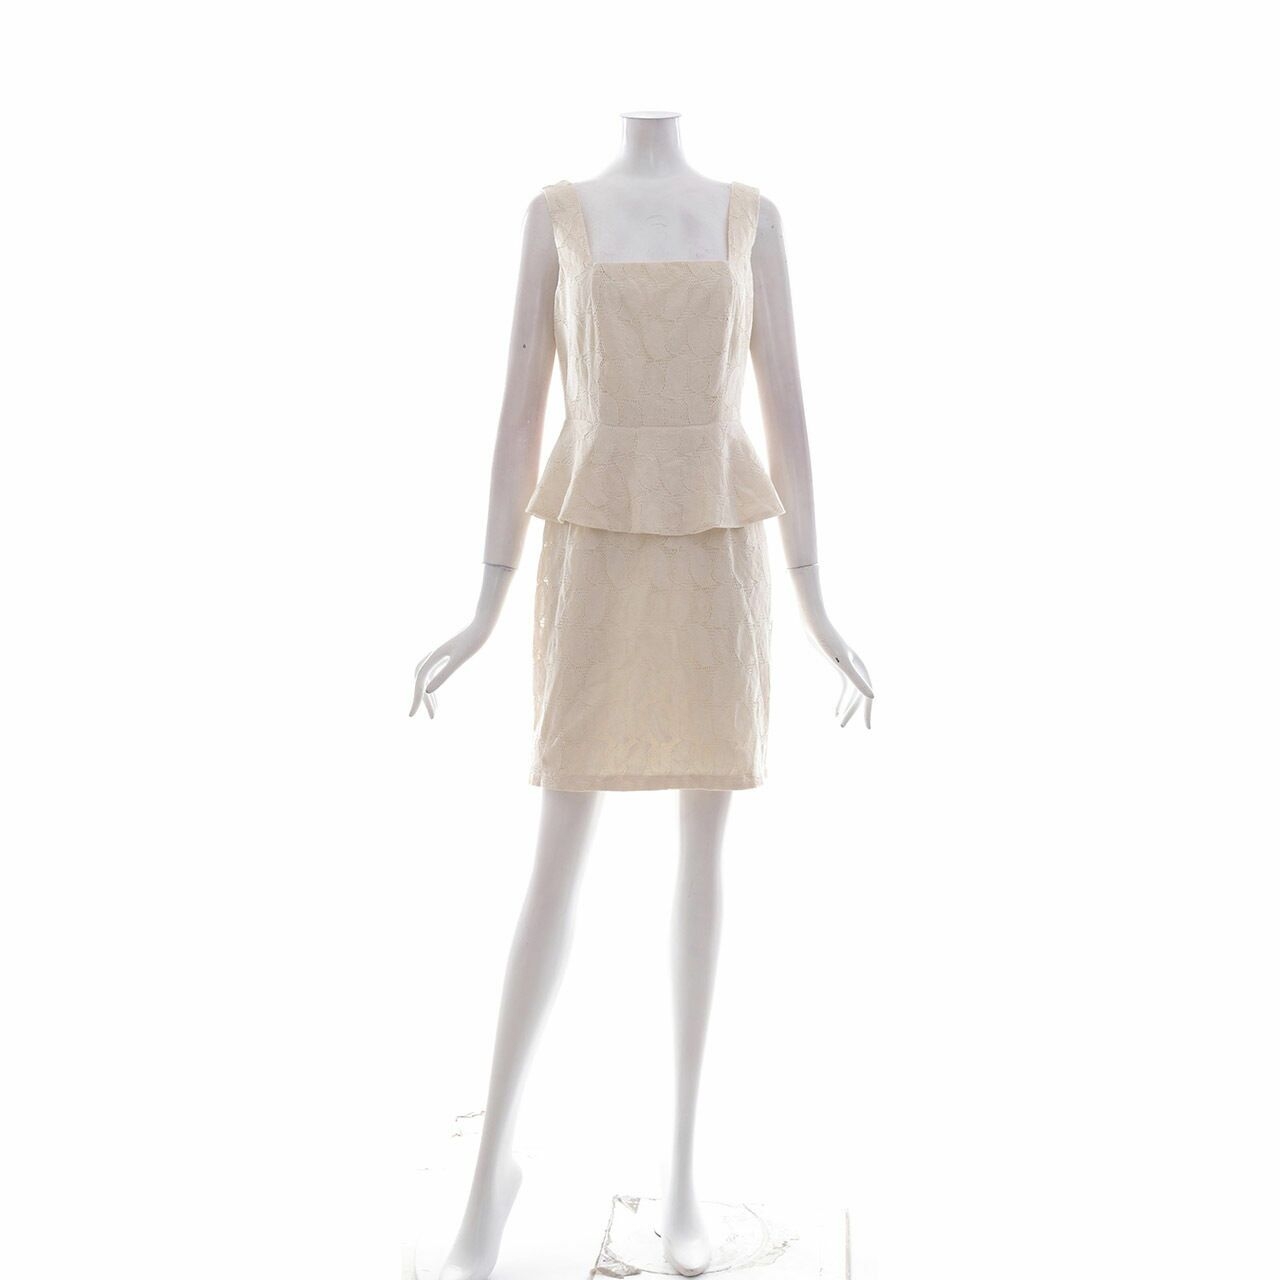 MM COUTURE Cream Lace Mini Dress